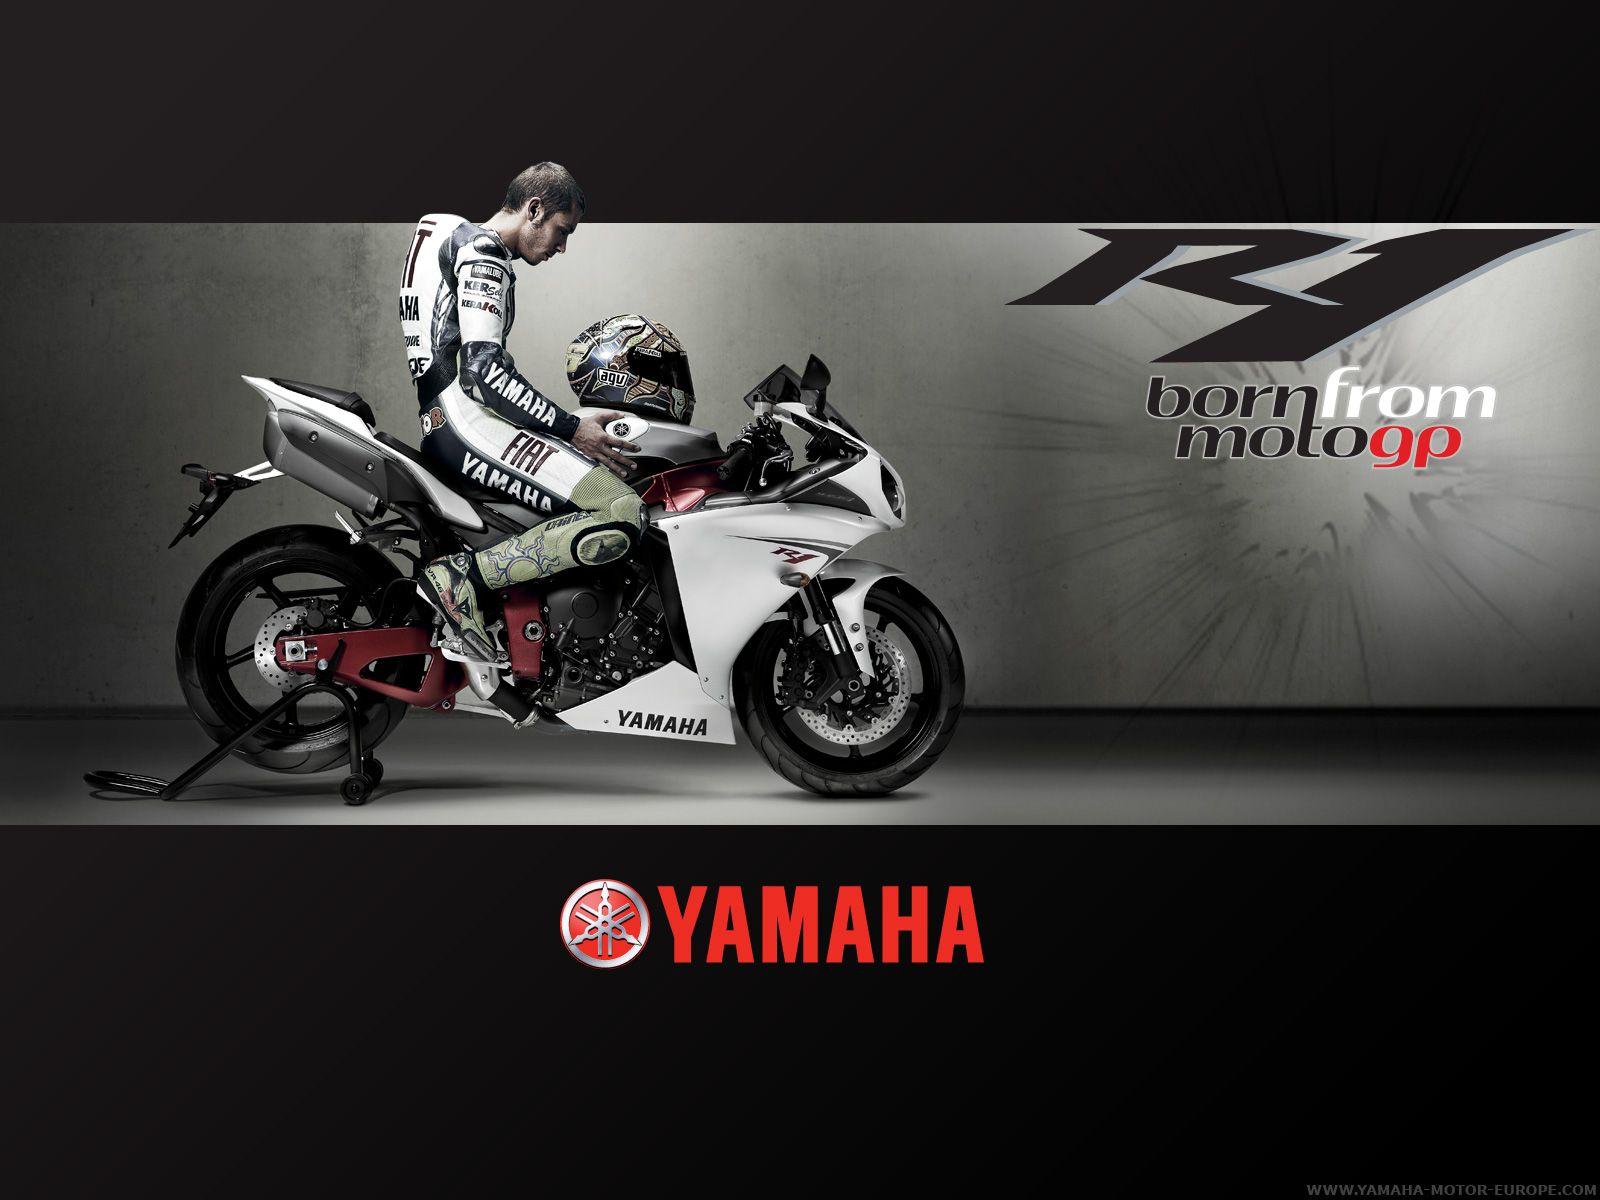 free wallpicz: Wallpaper Desktop Yamaha R1